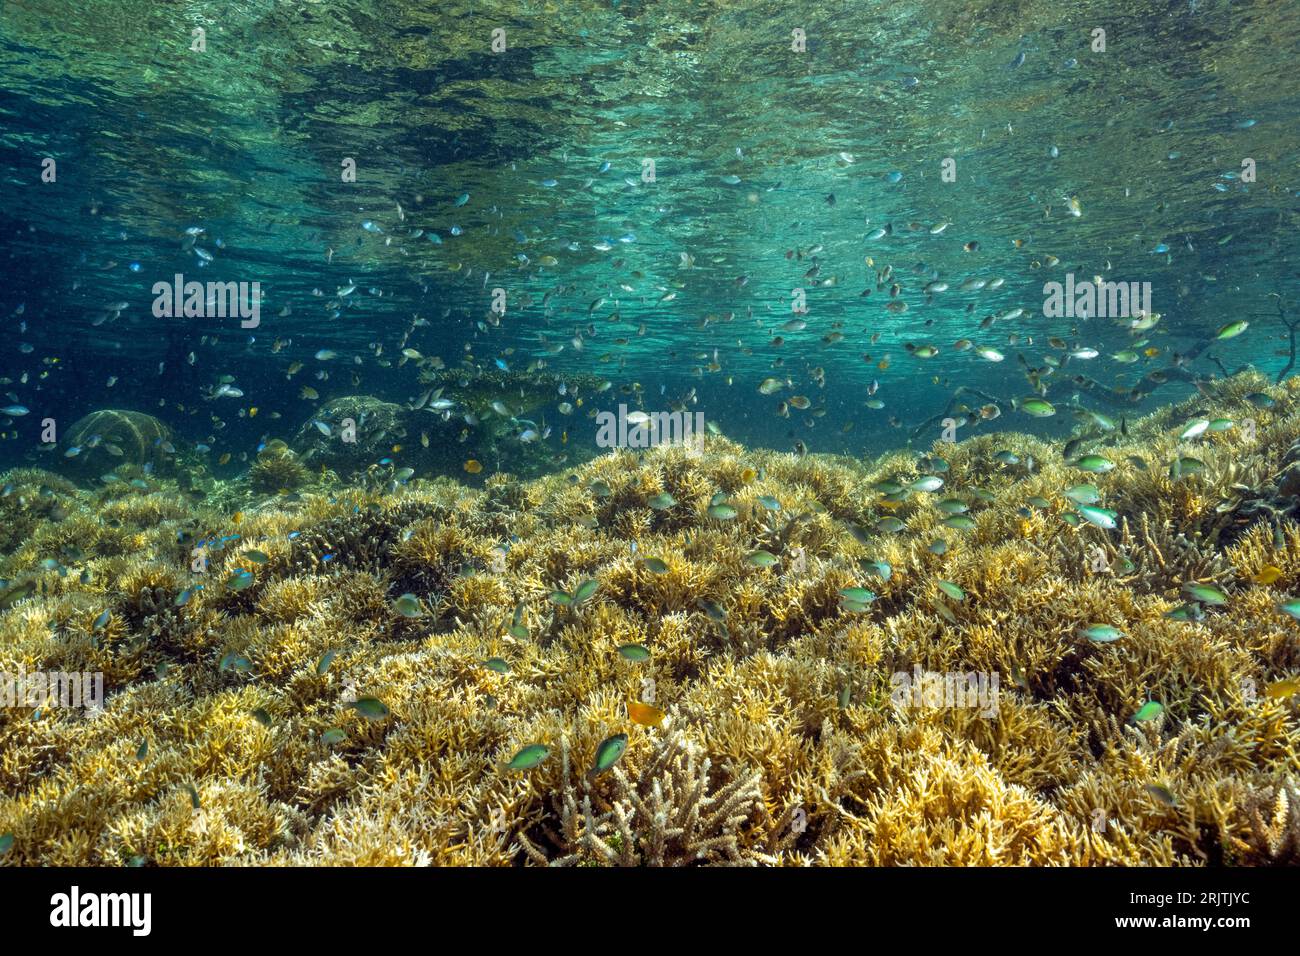 Damigelle su coralli sassosi poco profondi che urlano per raccogliere plancton, Gam Island Raja Ampat Indonesia. Foto Stock